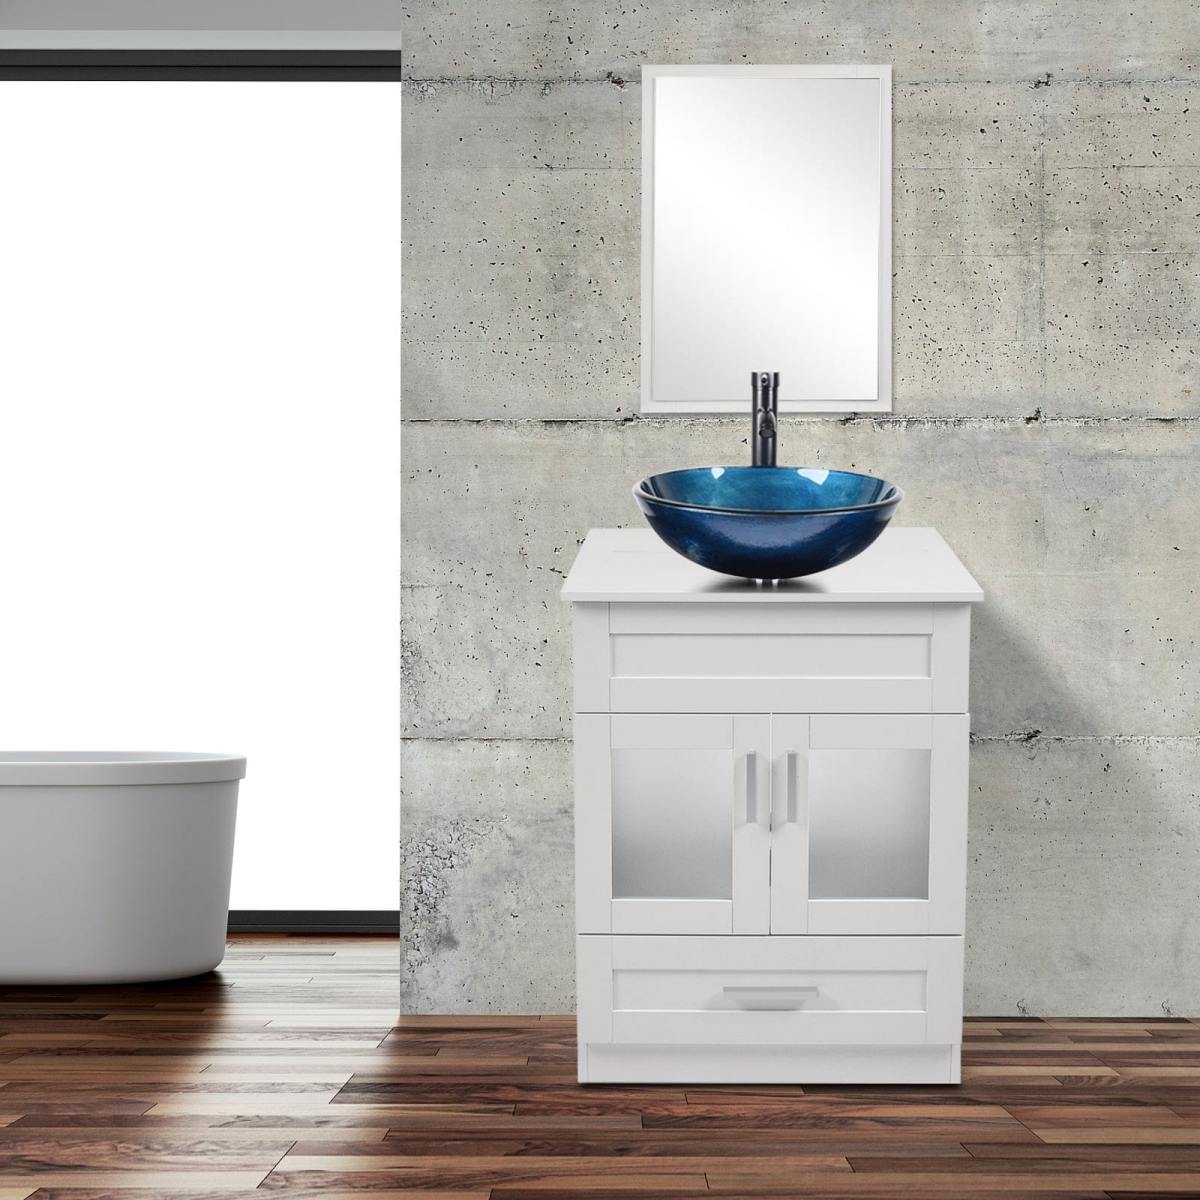 Elecwish White Bathroom Vanity with Blue Round Sink Set BA1001-WH display scene